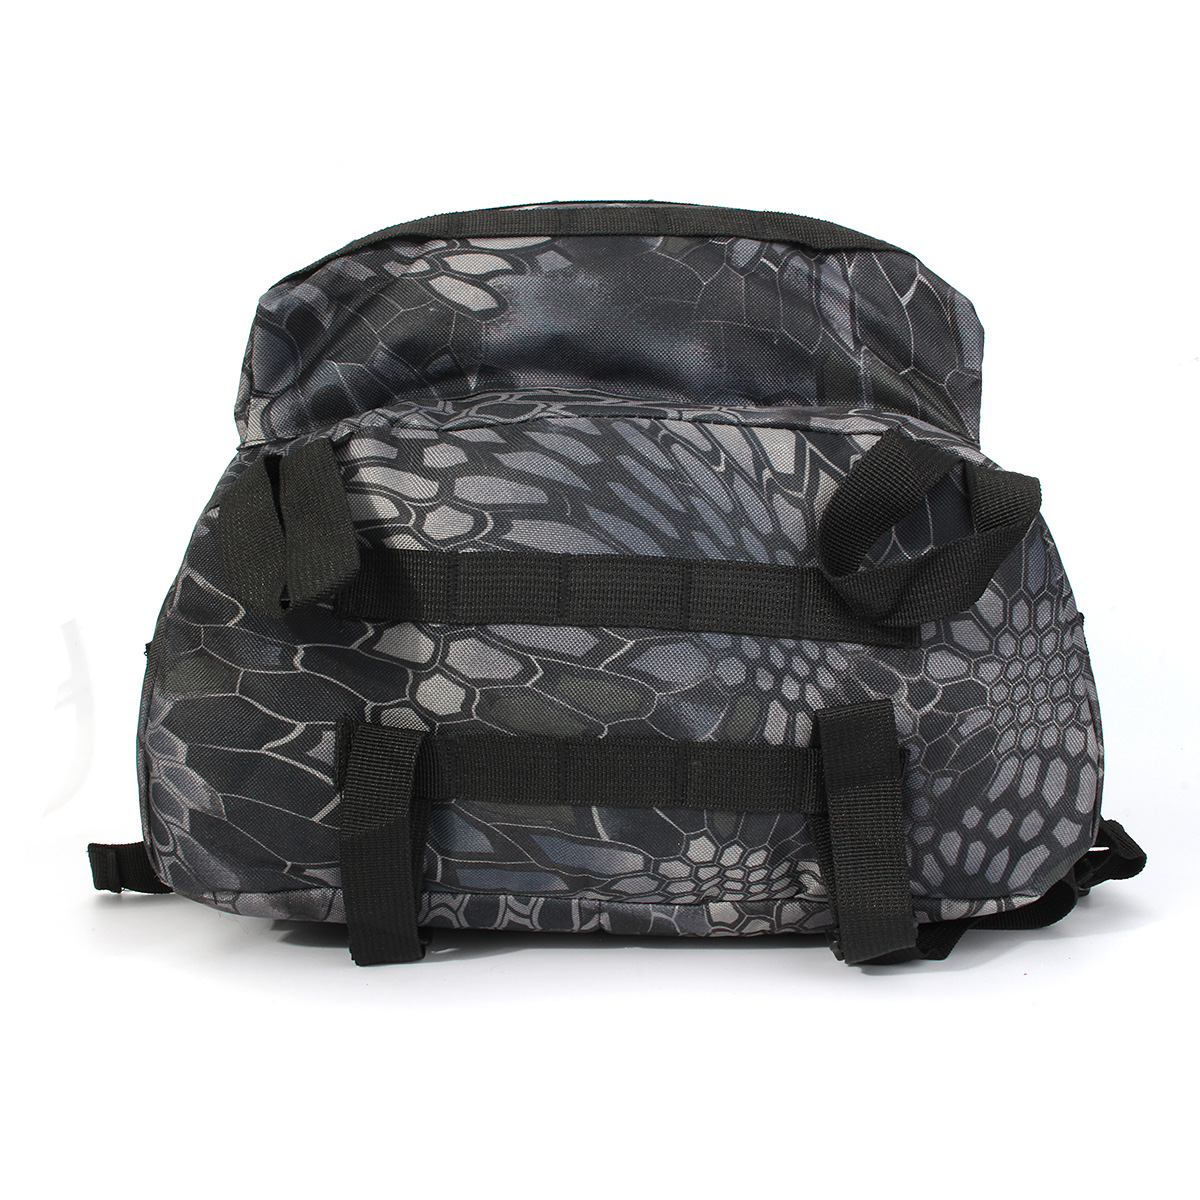 40L-Backpack-Unisex-Nylon-Sports-Backpack-Travel-Hiking-Climbing-Camping-Bag-1817655-6